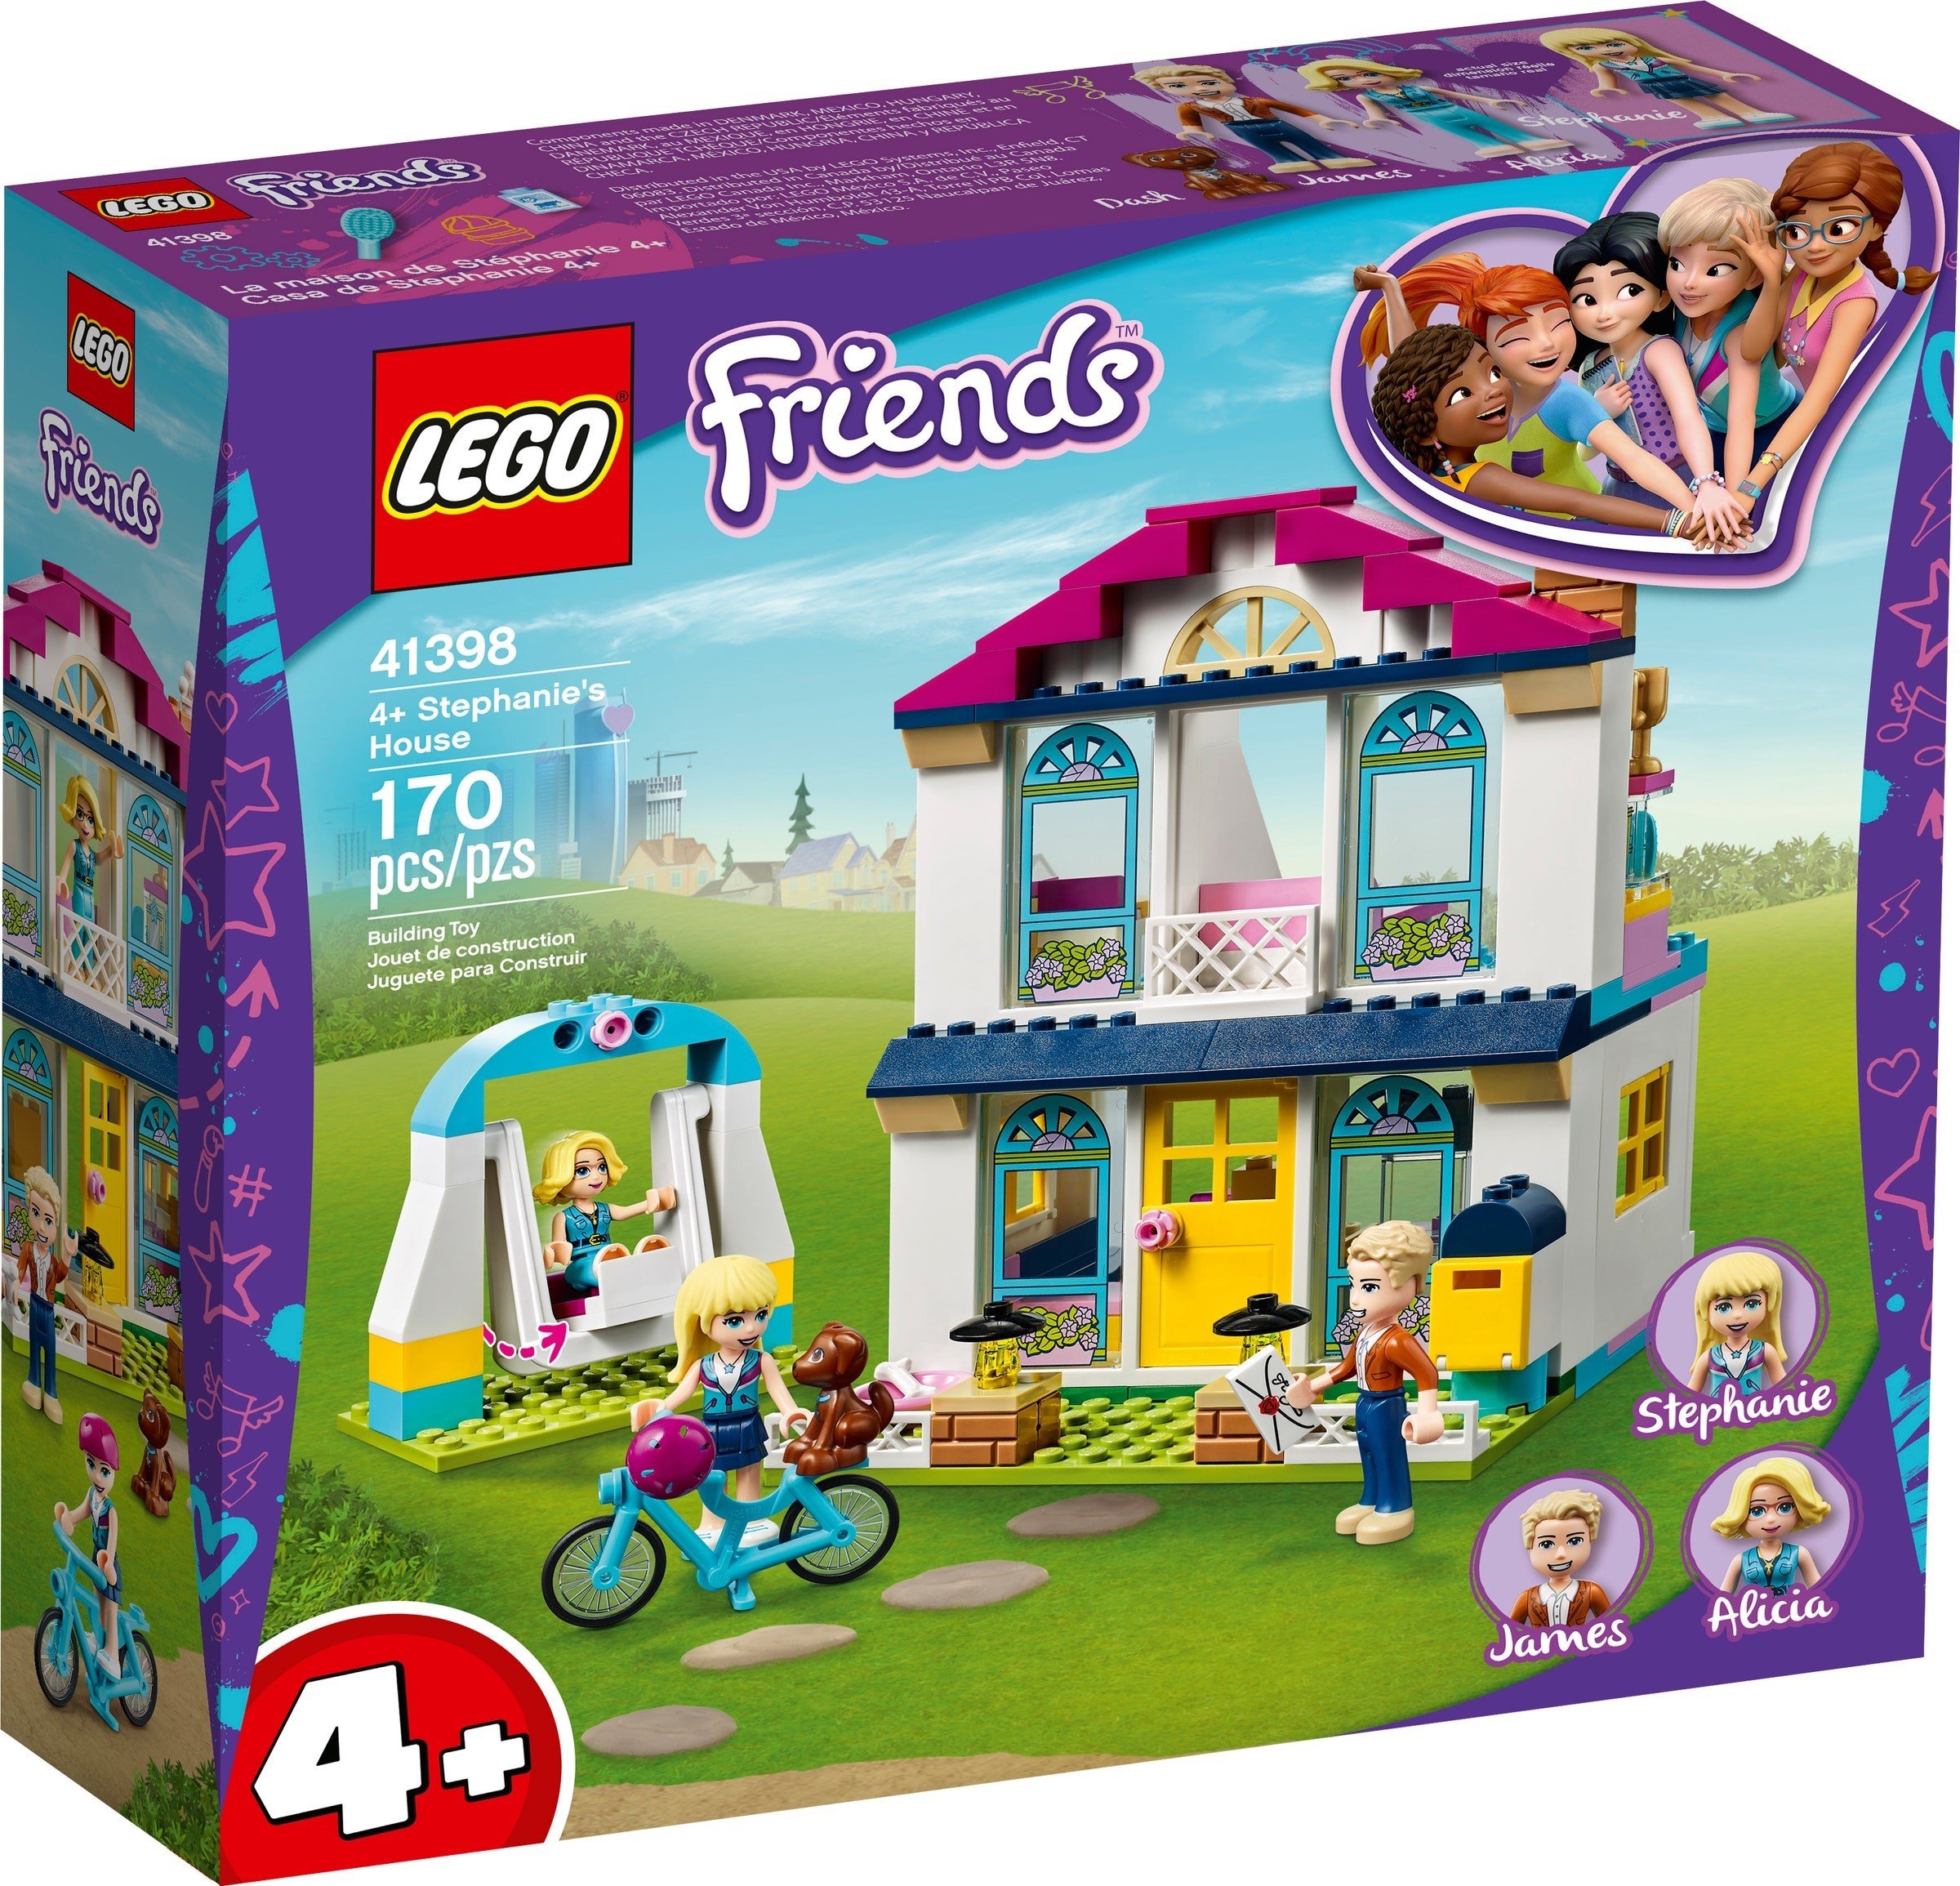 LEGO Friends - 4+ Stephanie's House (41398)